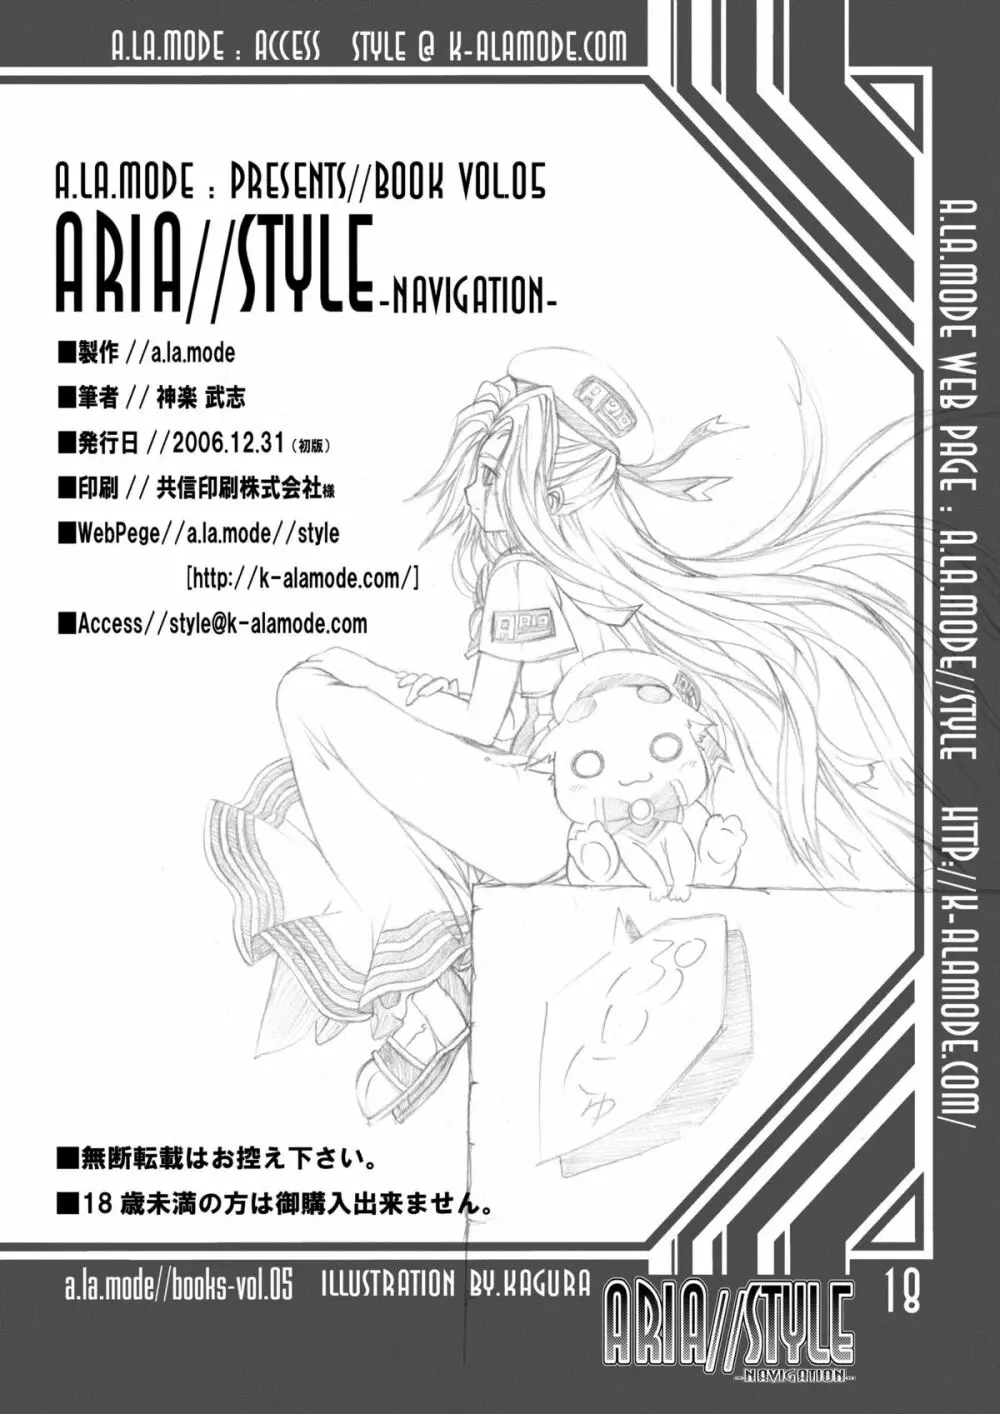 ARIA//Style -Navigation- 17ページ